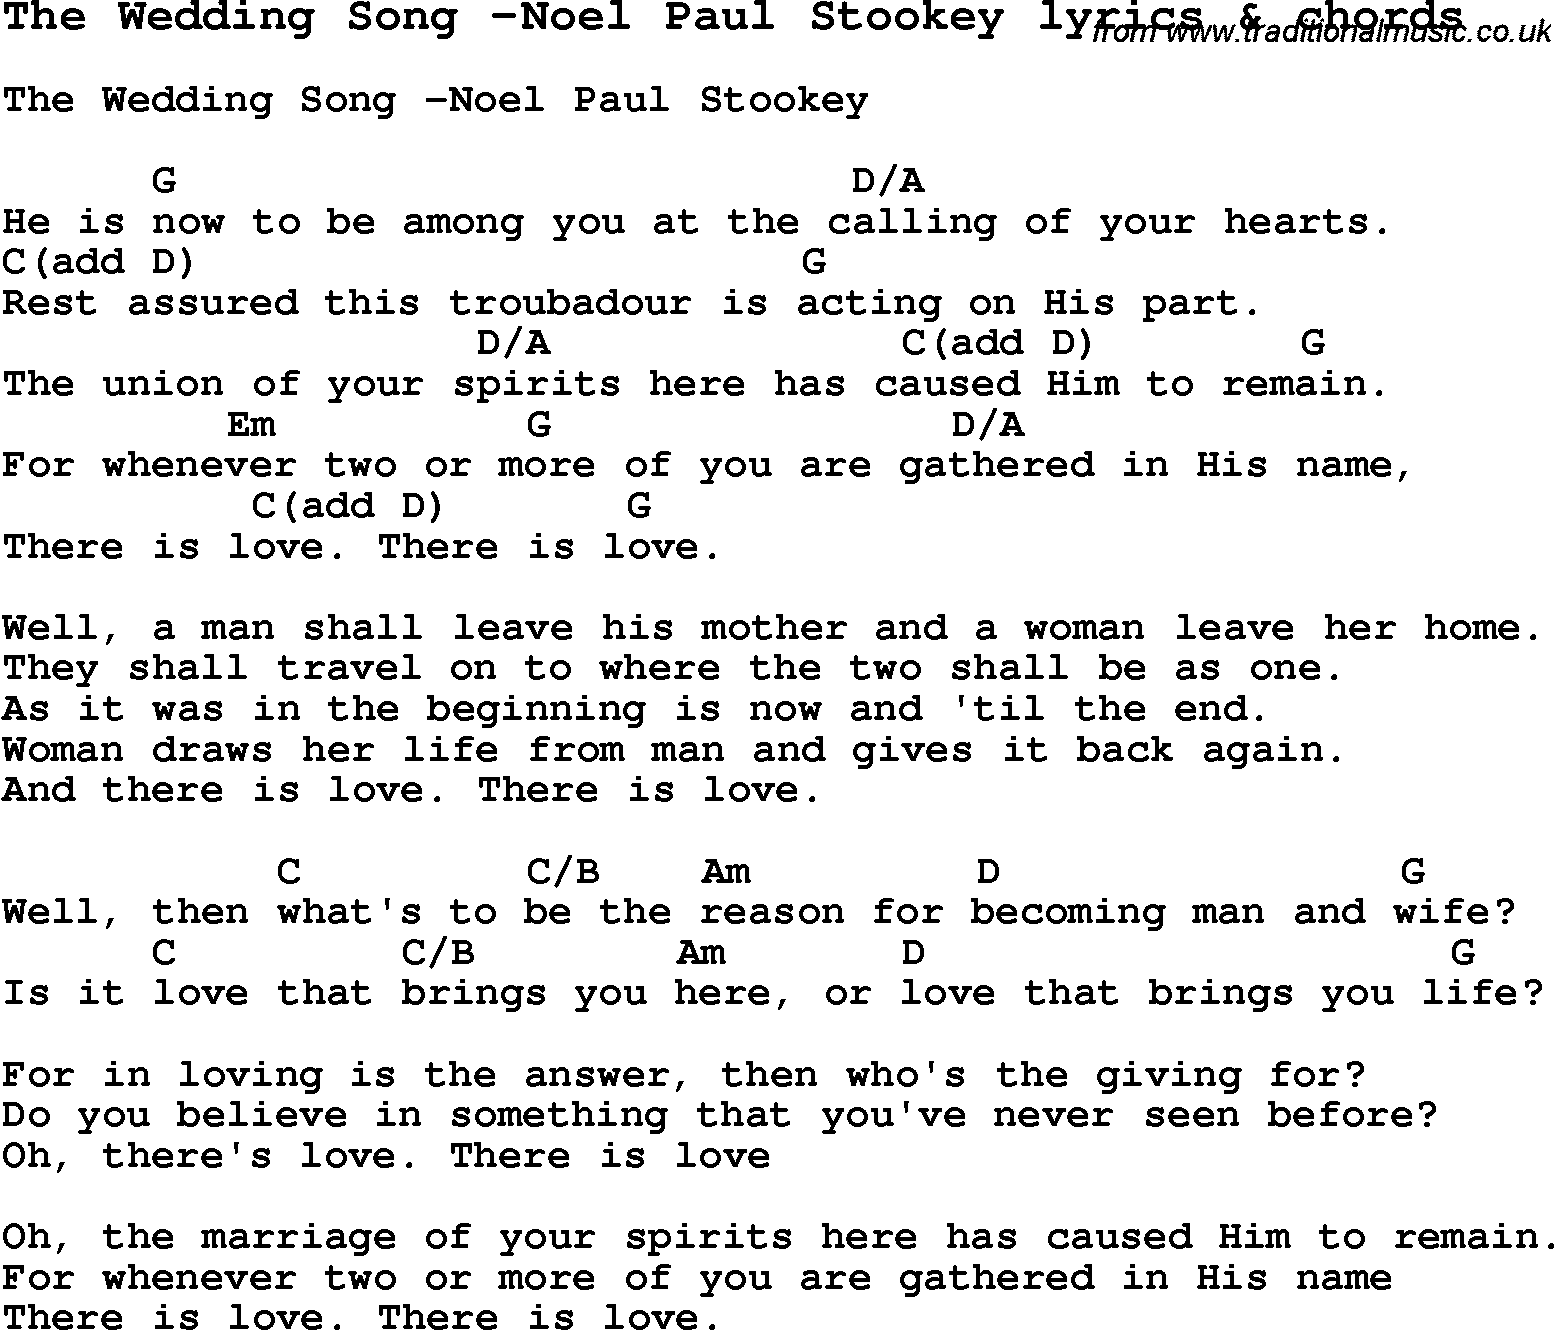 Love Song Lyrics for: The Wedding Song -Noel Paul Stookey with chords for Ukulele, Guitar Banjo etc.